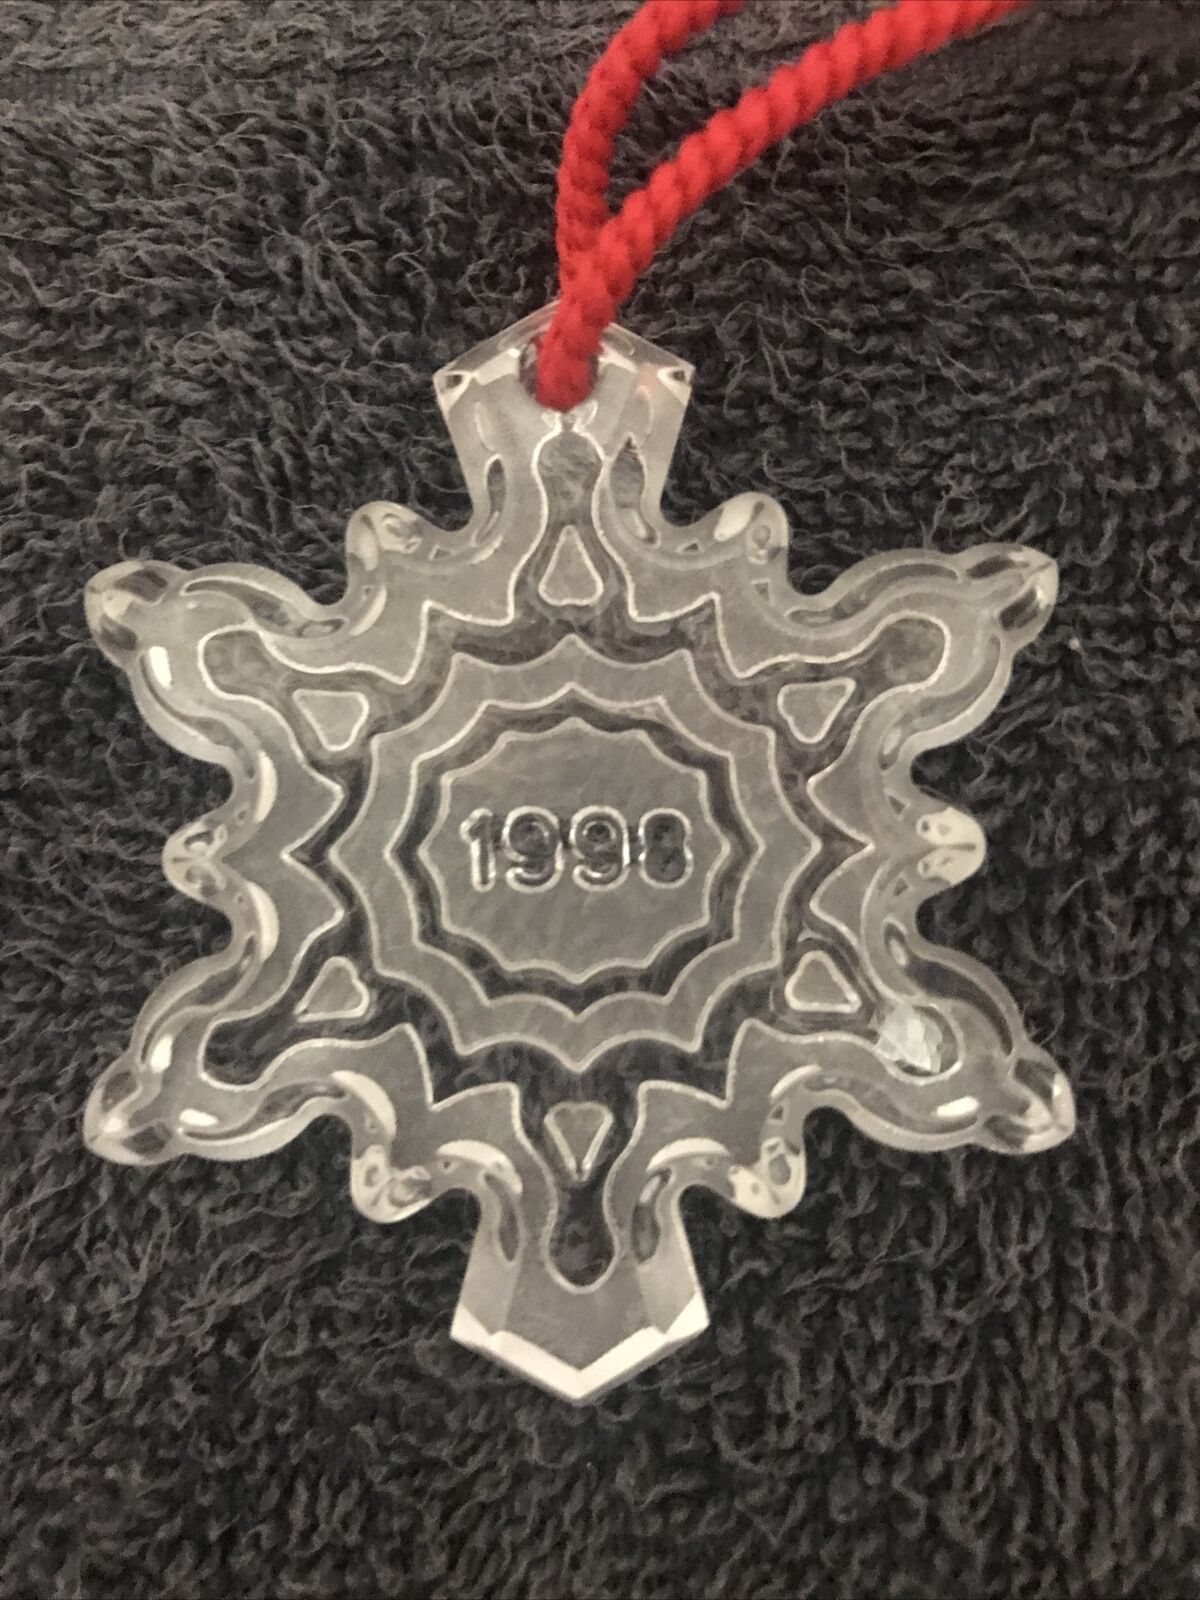 1998 Waterford Crystal Snowflake Ornament